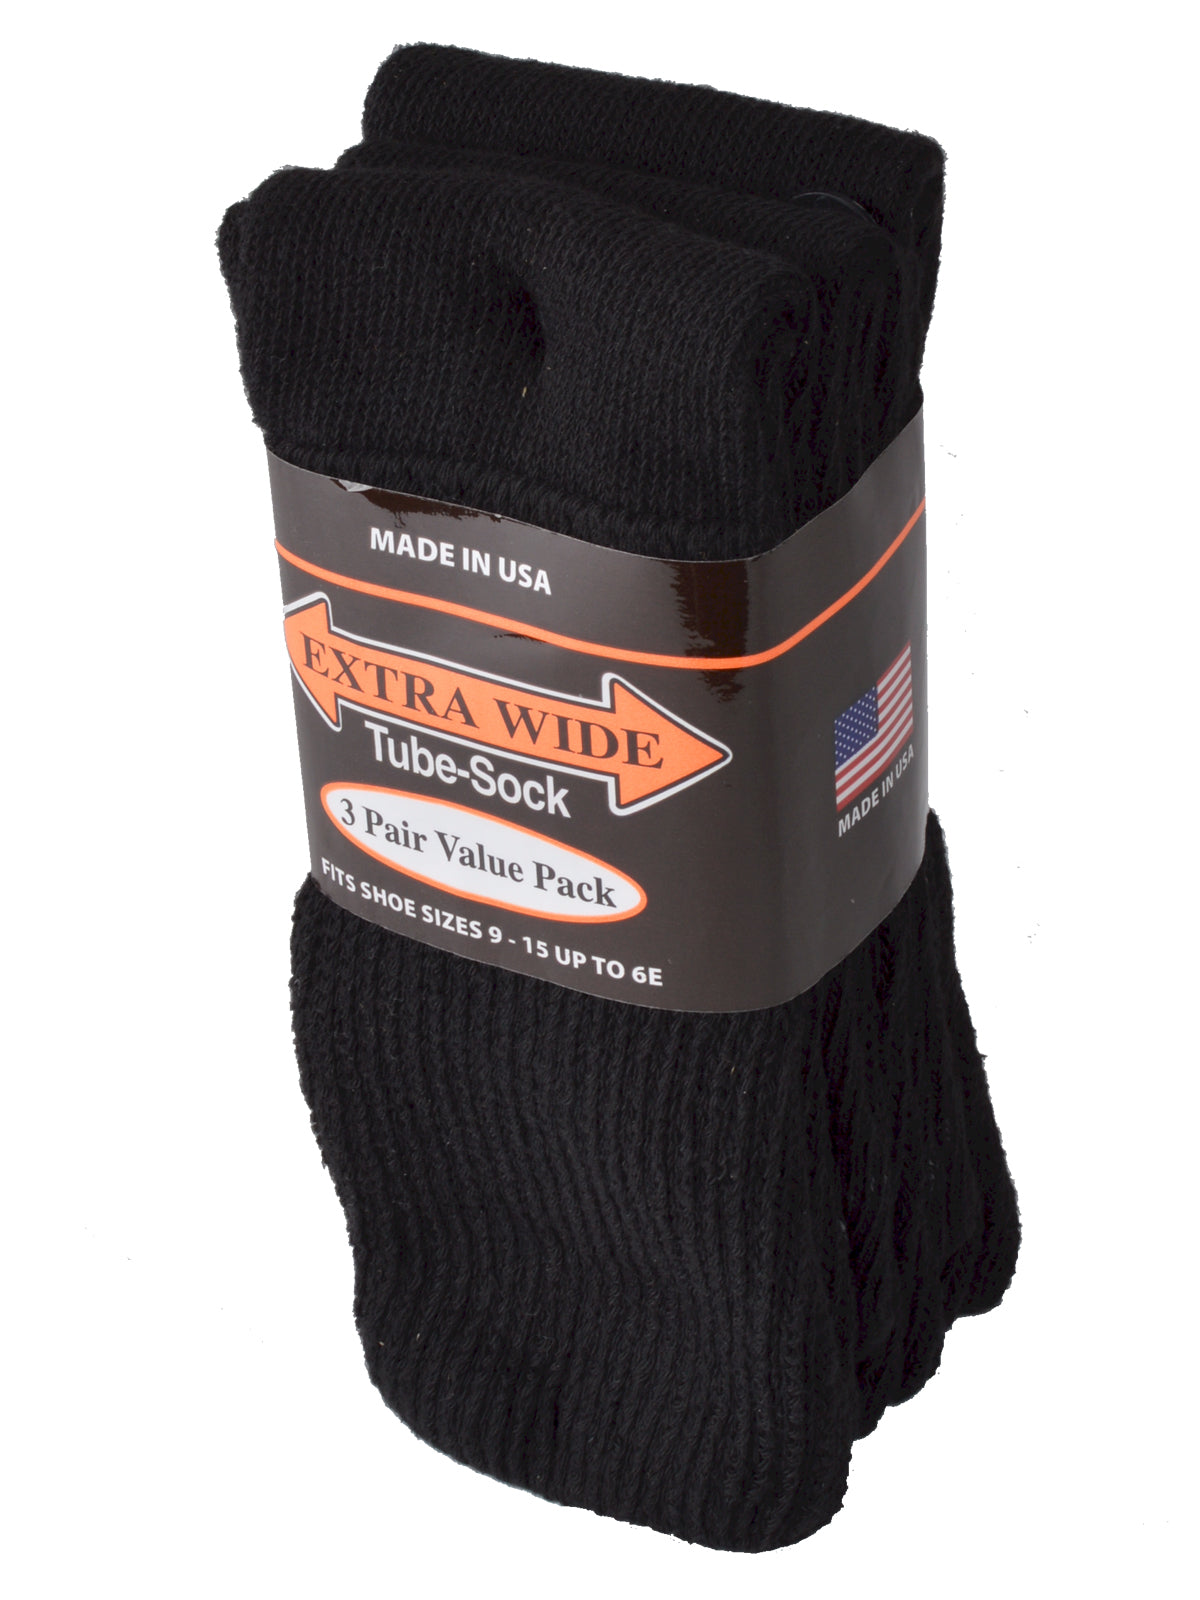 Extra Wide Men's Tube Sock 3-Pack in Black - Shoe Sizes 9 - 15